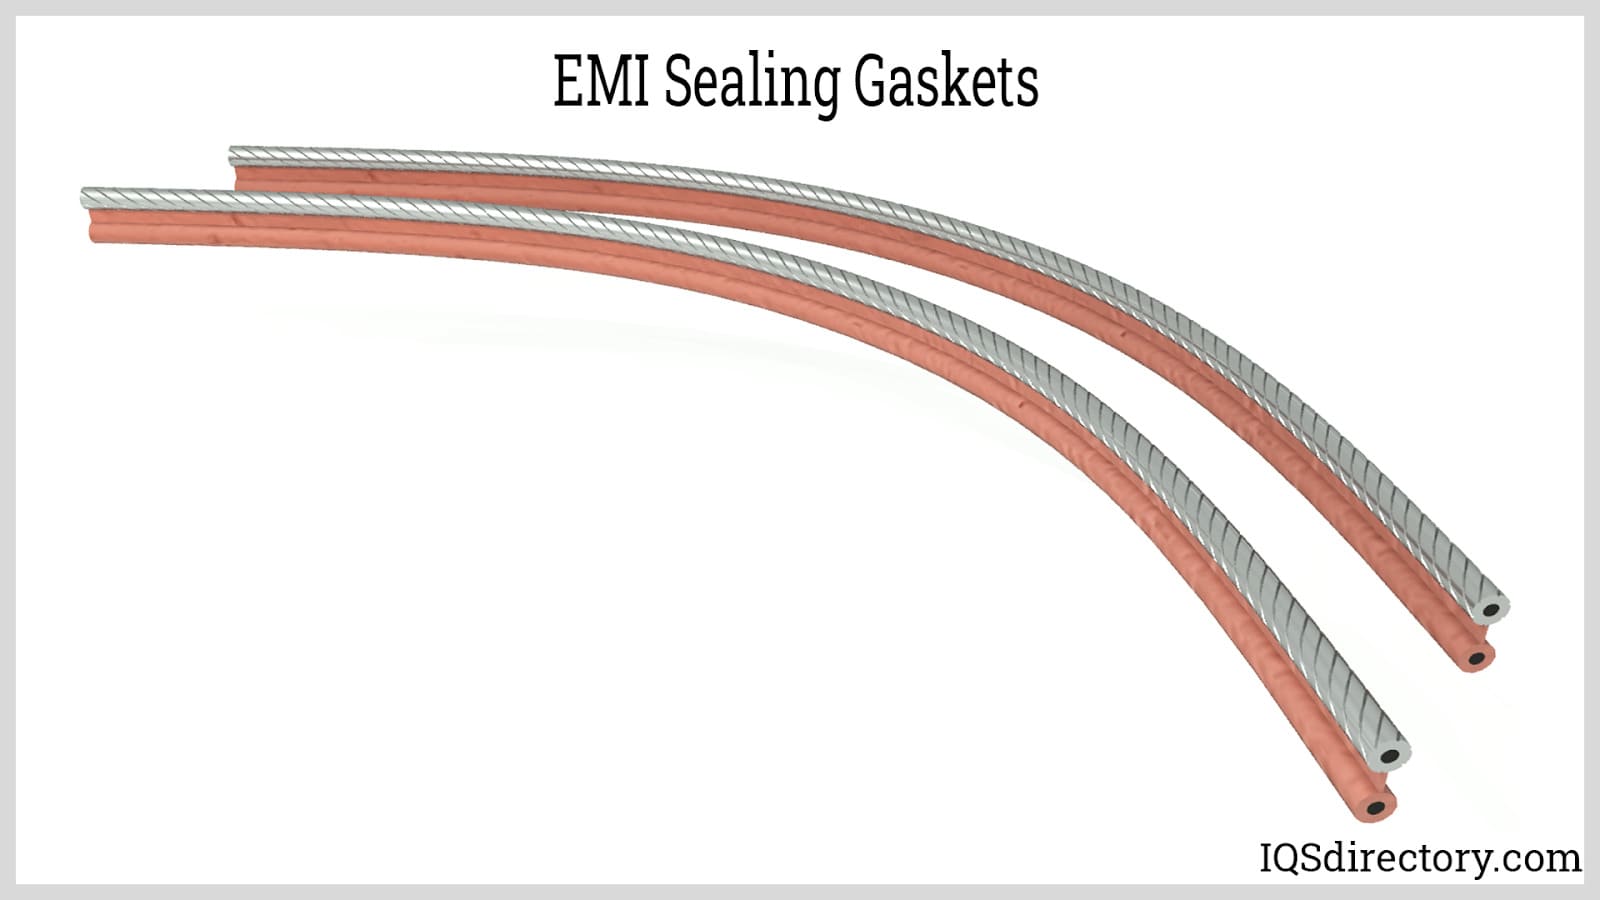 EMI Sealing Gaskets